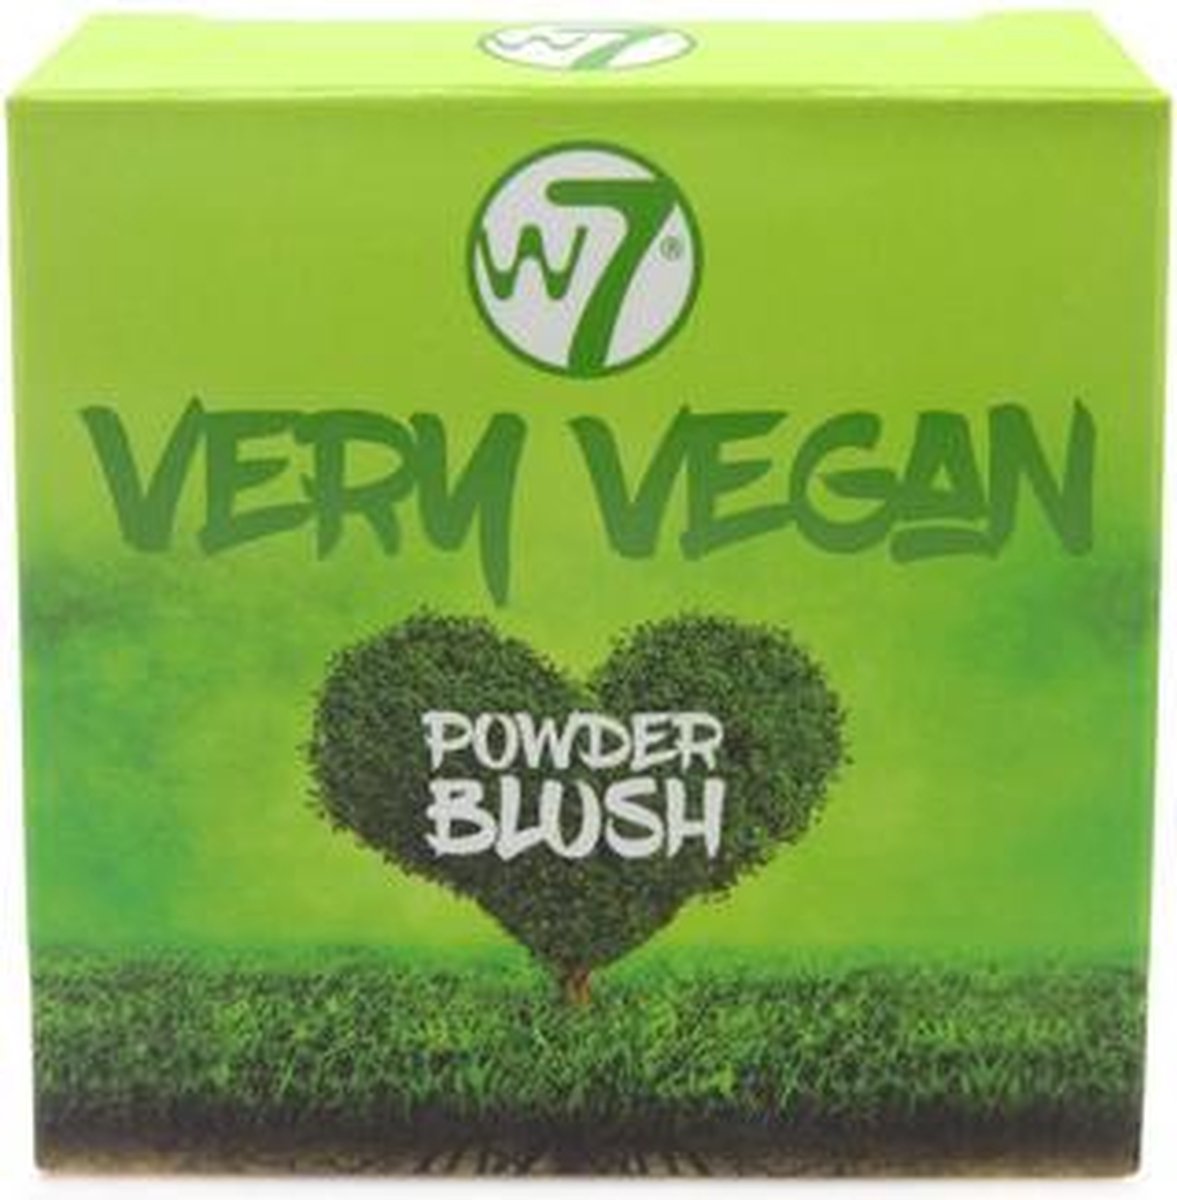 W7 Very Vegan Powder Blusher Bare Blossom